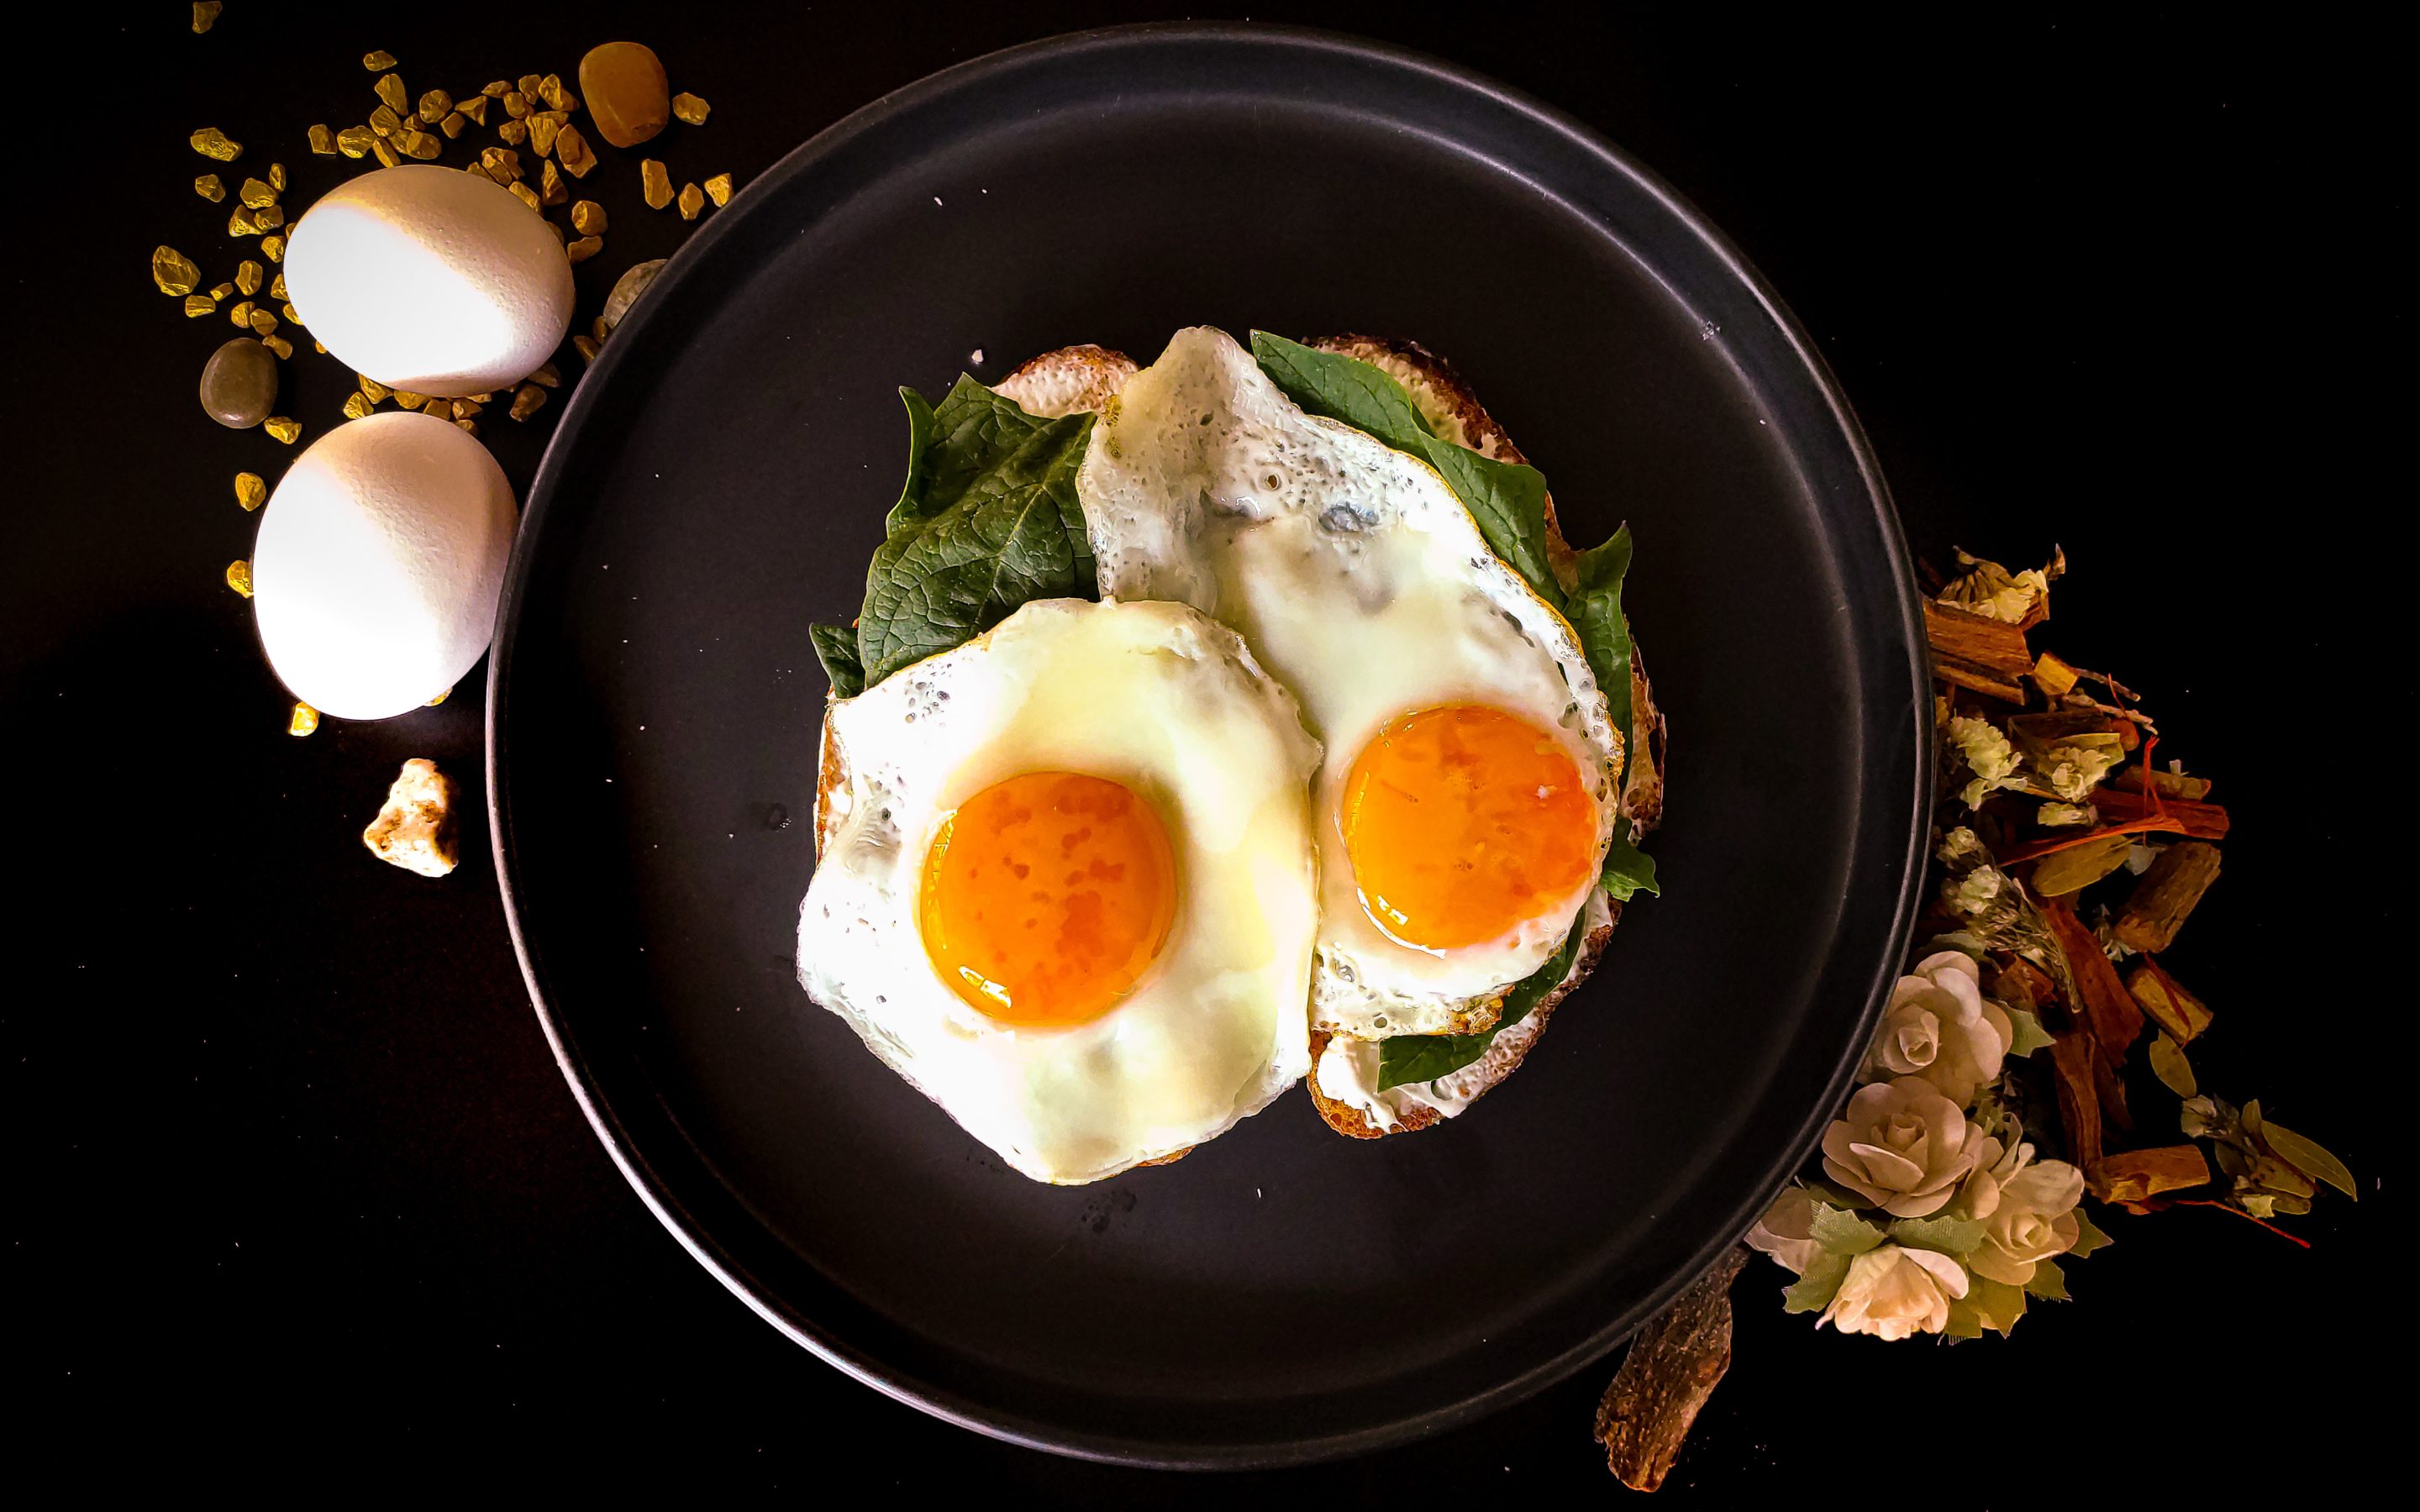 Do Eggs Cause Heart Disease?